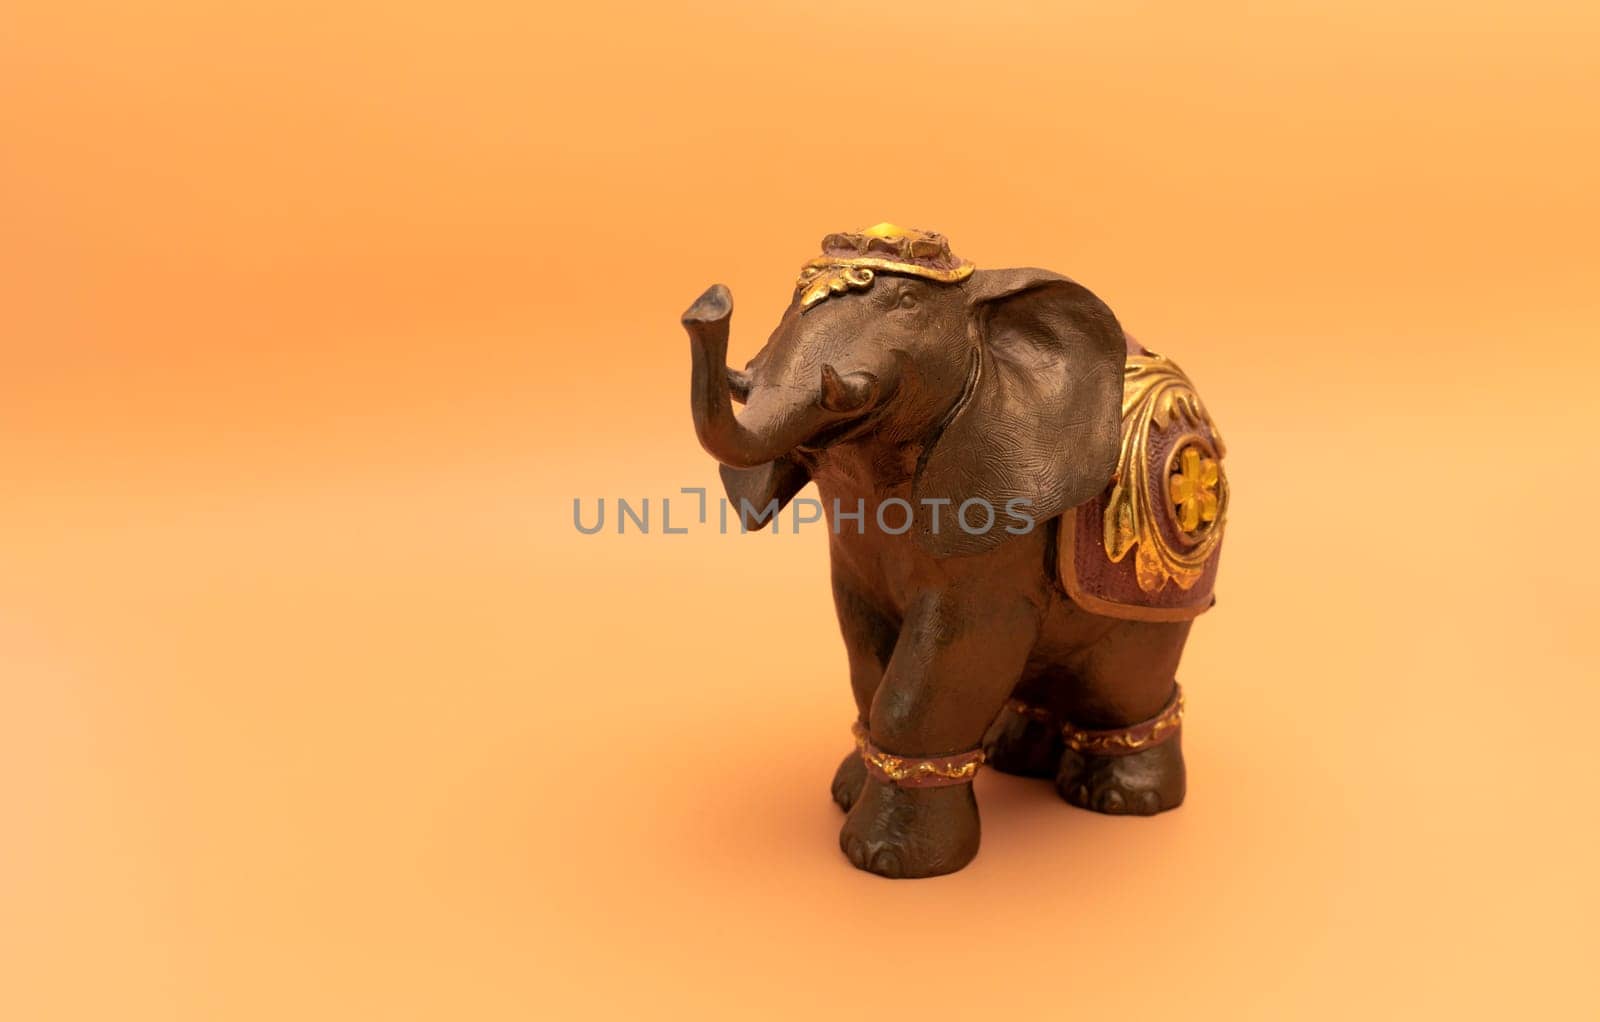 Design Bronze Decorated Elephant On Peach Yellow Background. World Elephant Day. Copy Space, Postal Card. Ganesha Chaturthi Holiday. Sacred Symbol In Hindu And Buddhist Religions. Design, Horizontal.